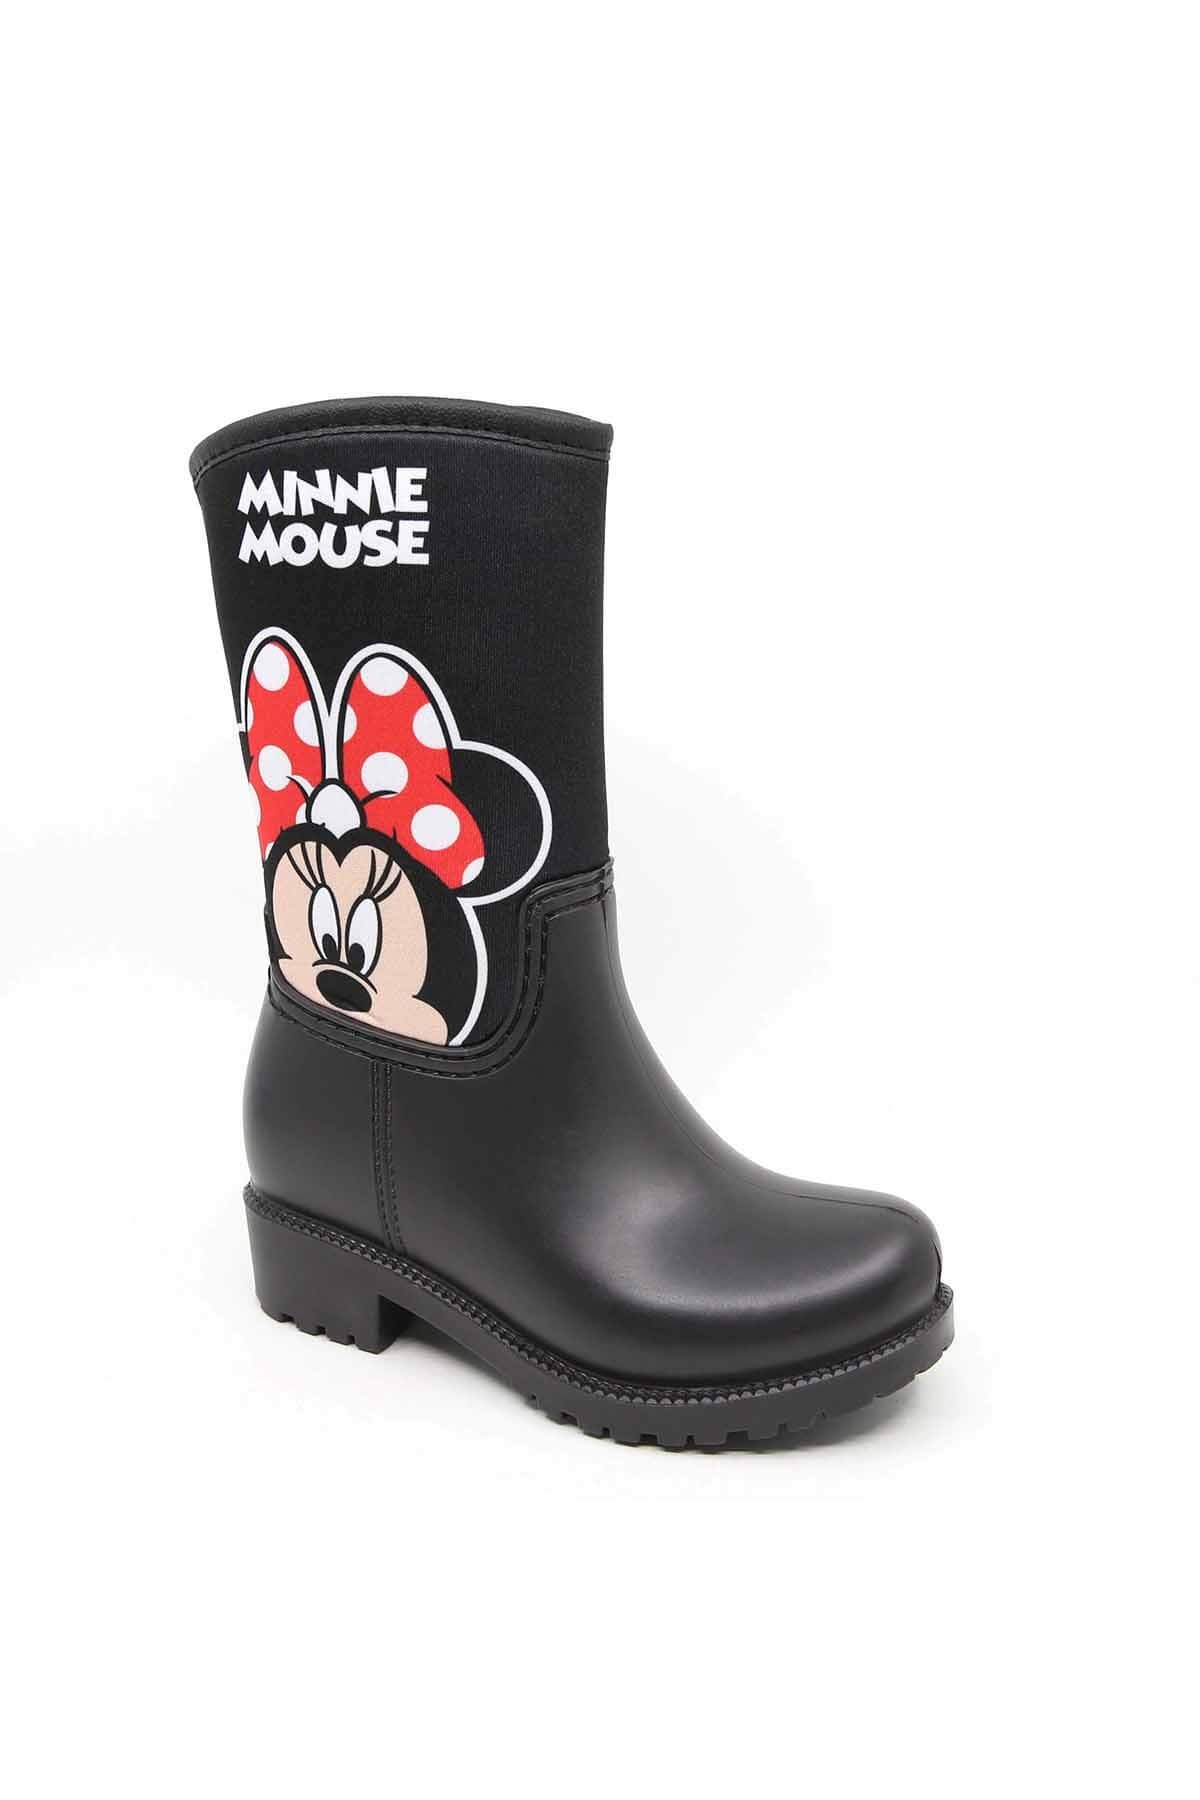 Kız Çocuk Minnie Mouse Yağmur Botu SİYAH